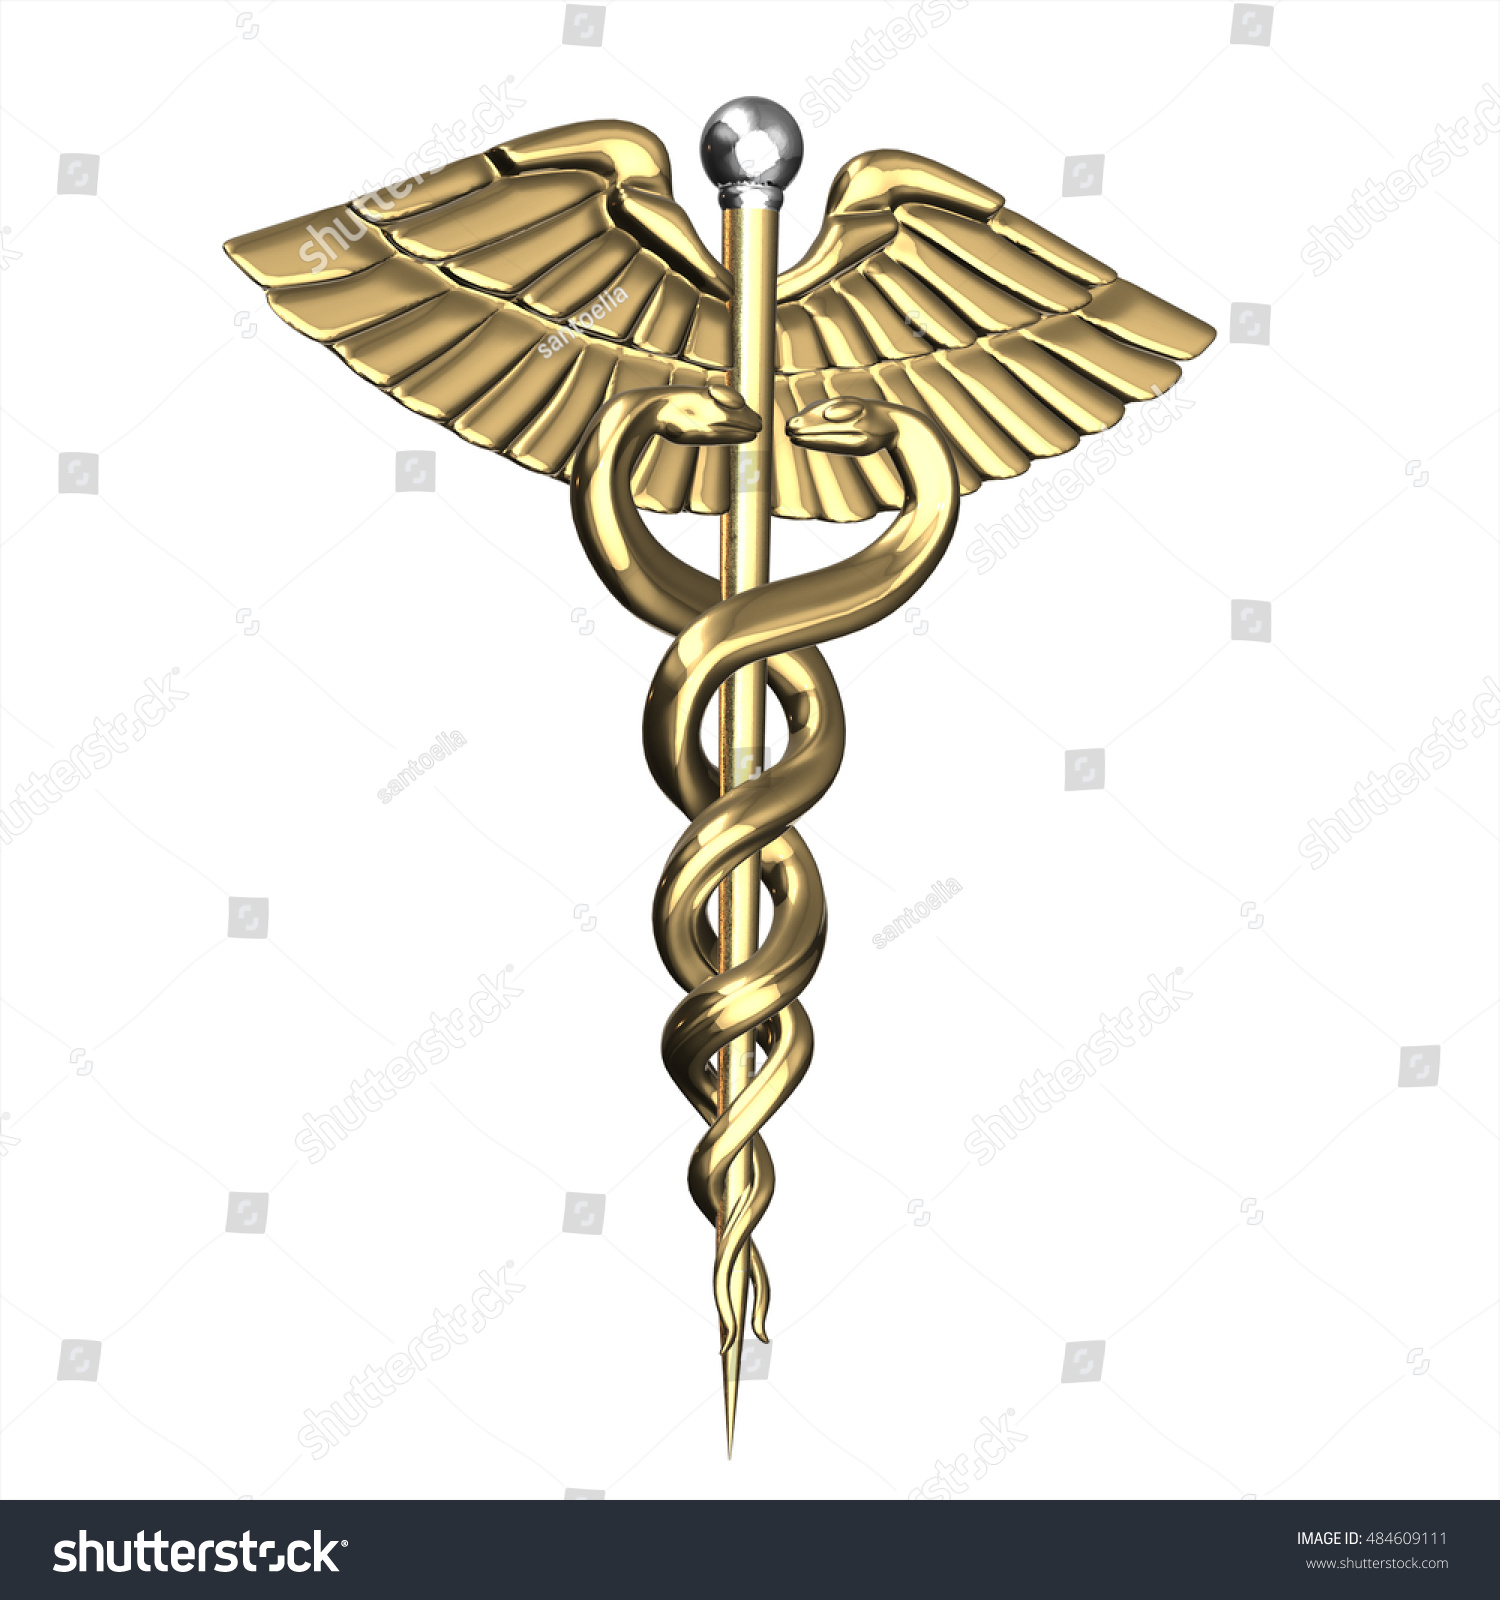 Golden Caduceus Medical Symbol 3d Rendering Stock Illustration ...